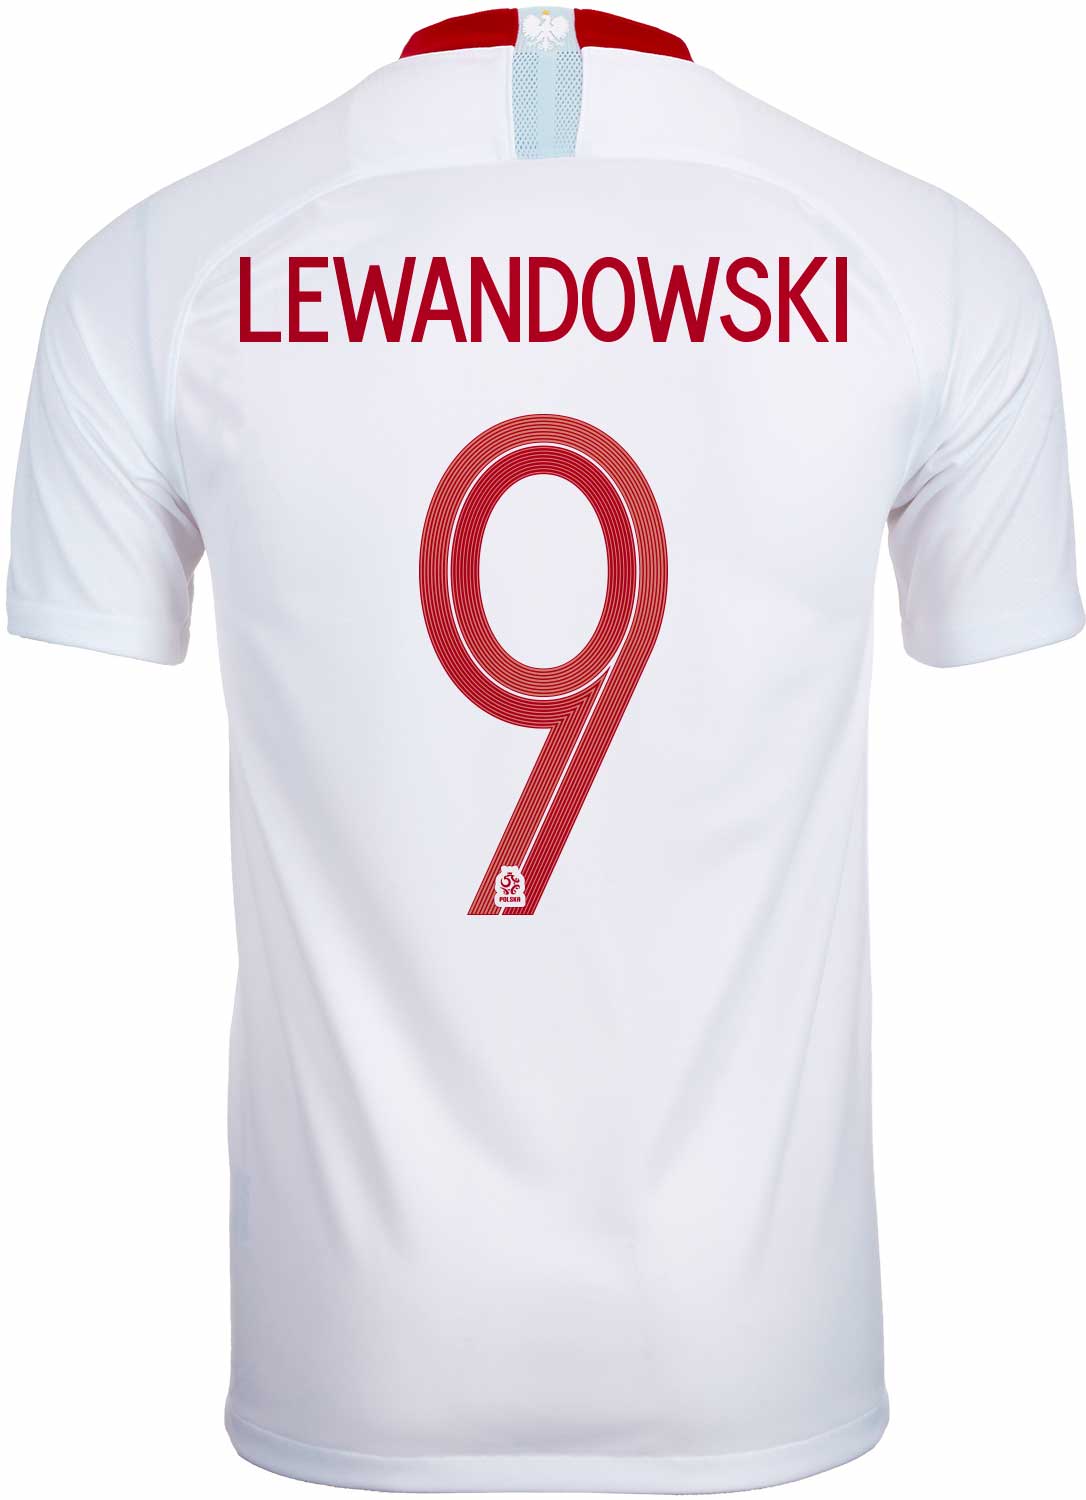 lewandowski jersey